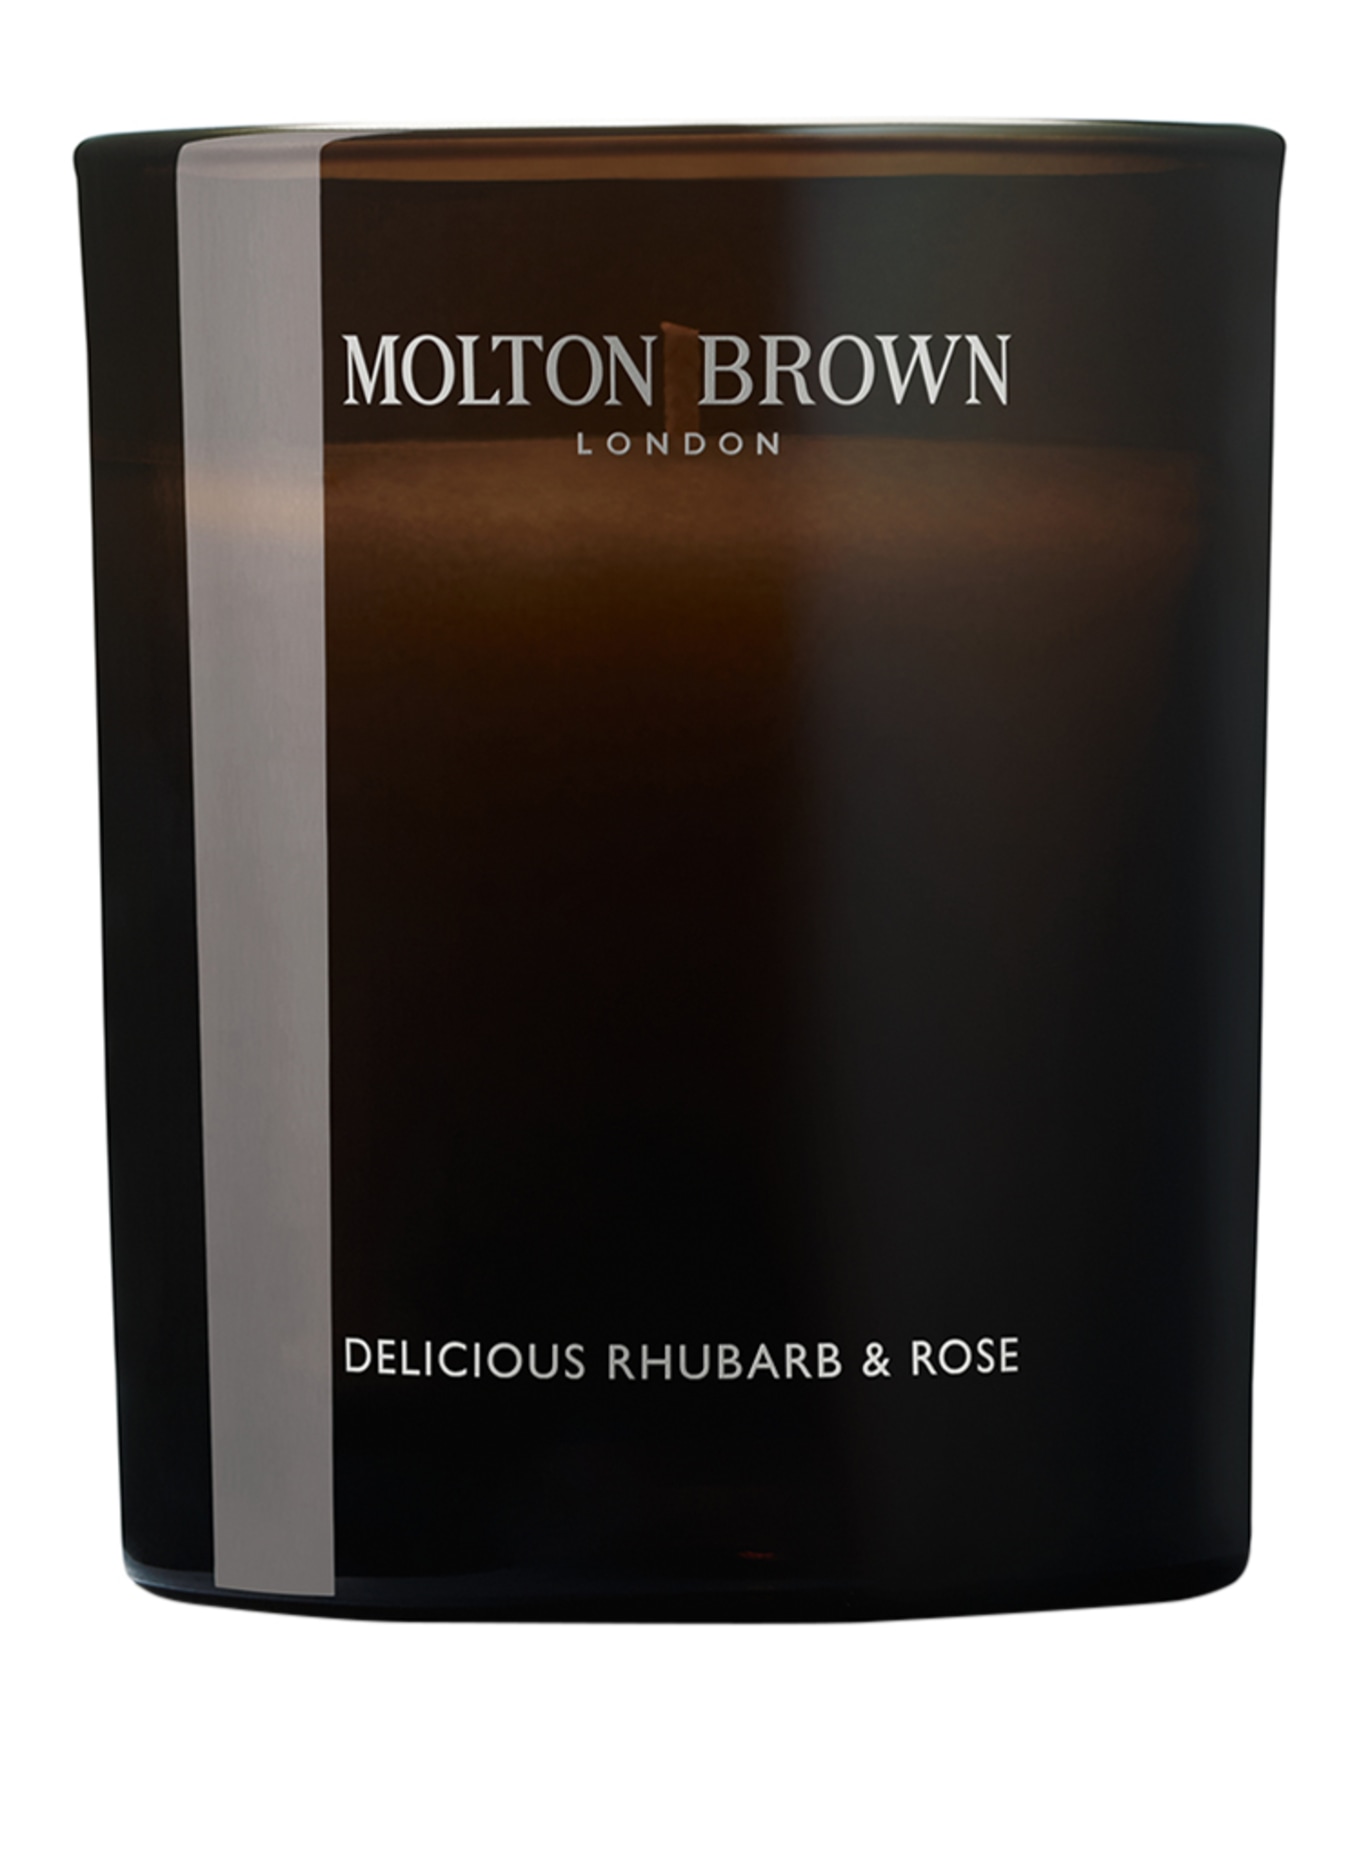 MOLTON BROWN DELICIOUS RHUBARB & ROSE (Bild 1)